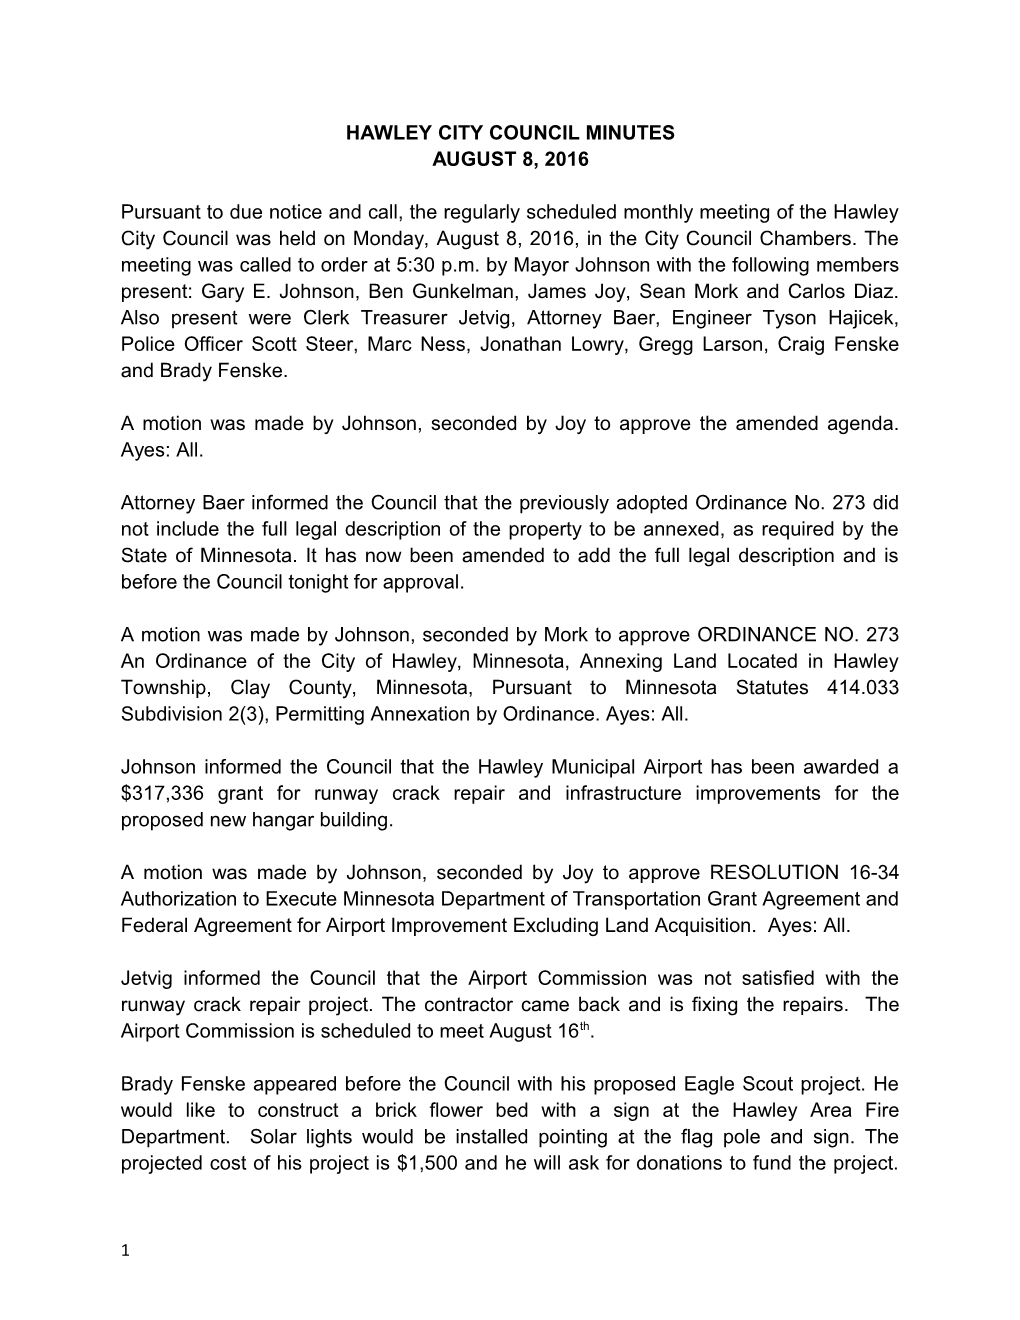 Hawley City Council Minutes s1